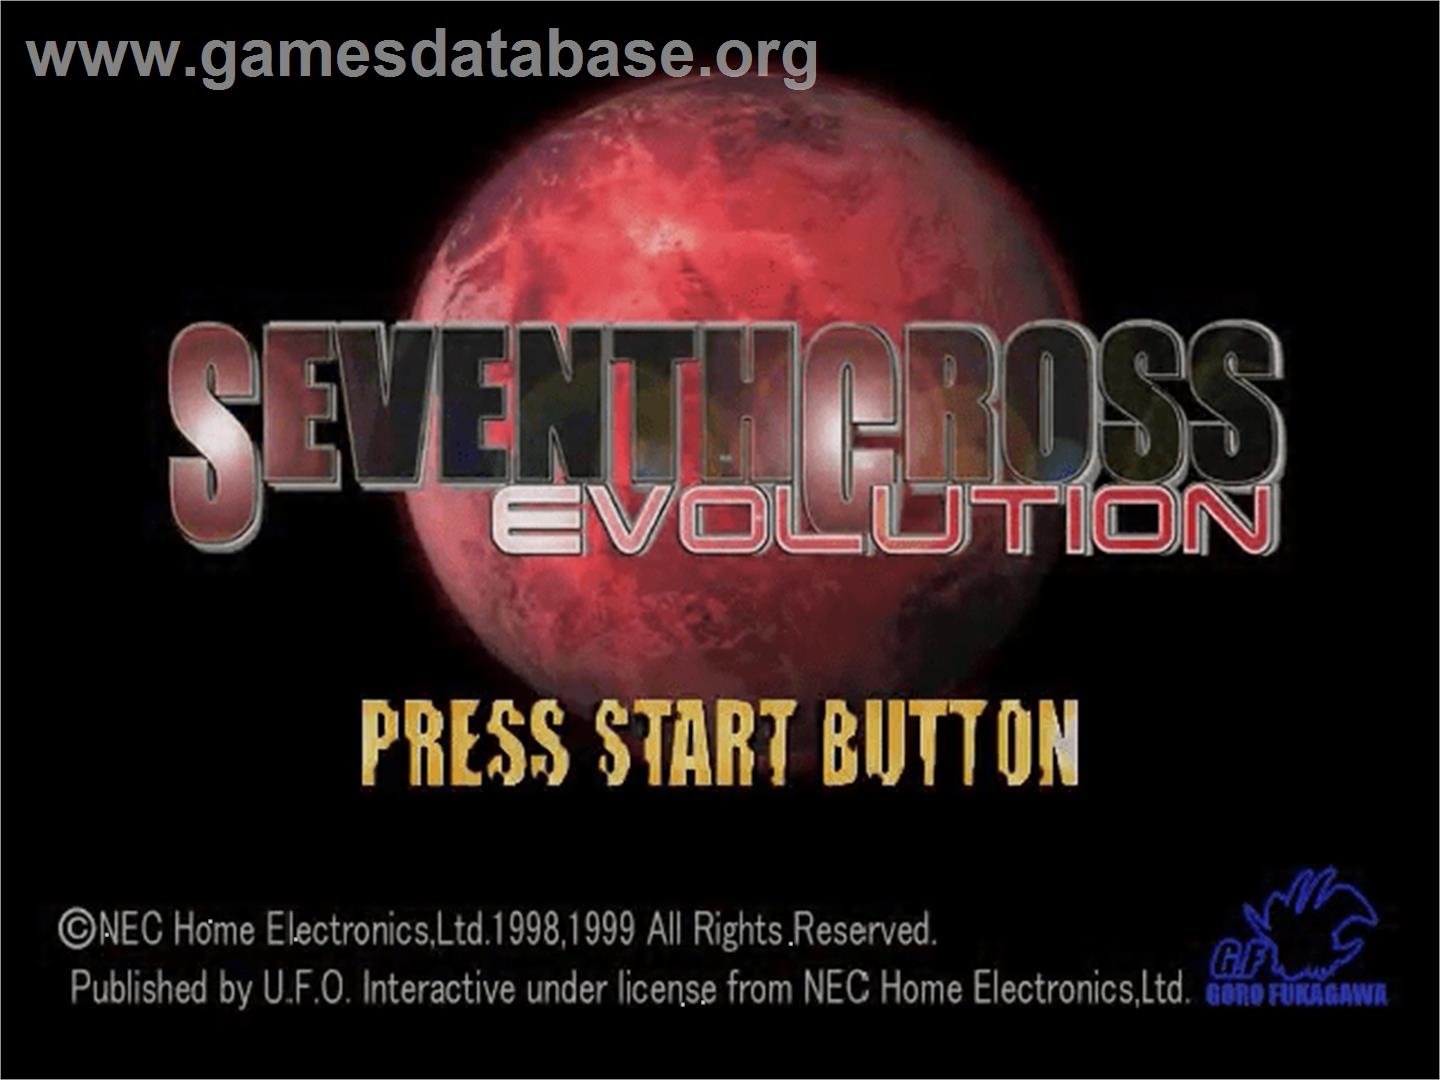 Seventh Cross Evolution - Sega Dreamcast - Artwork - Title Screen